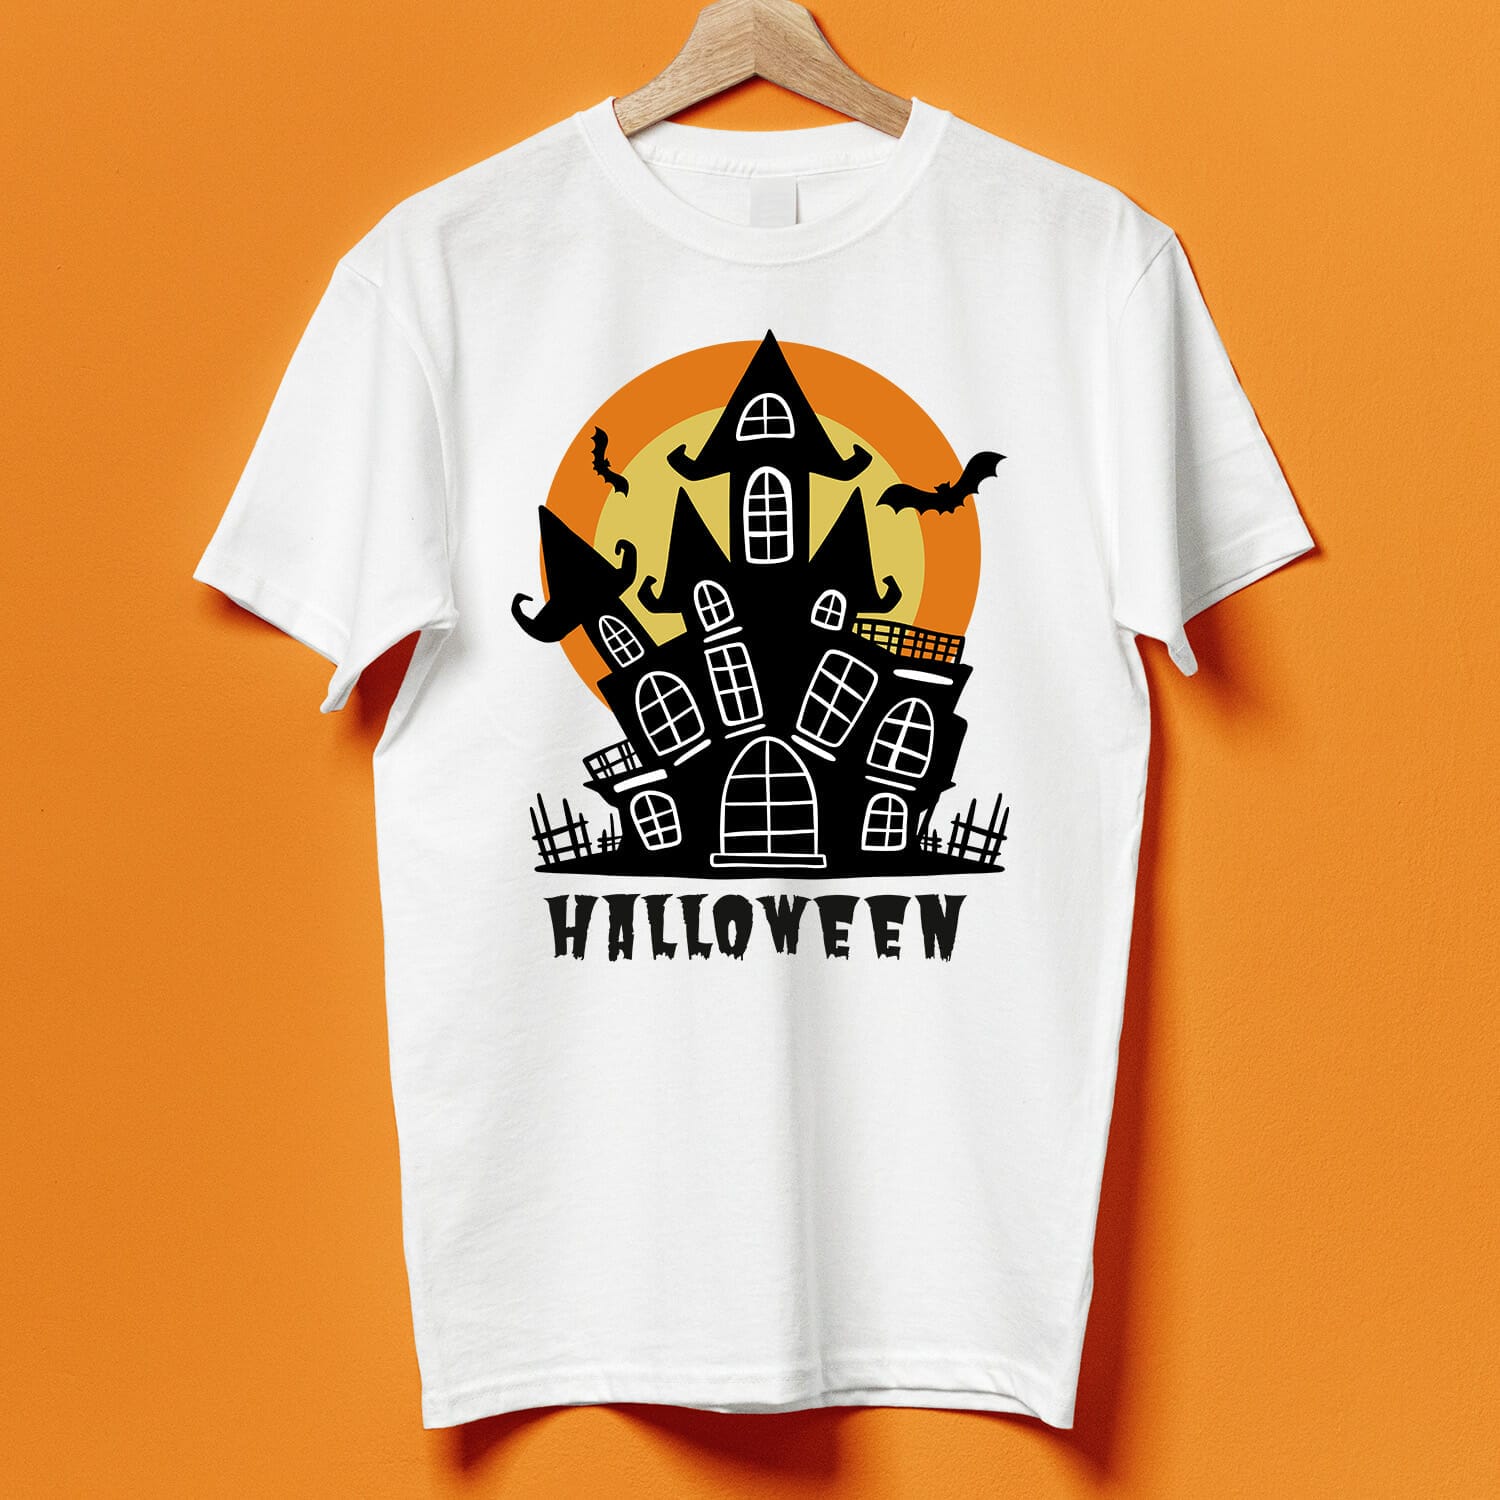 Halloween Scary Castle T-shirt Design